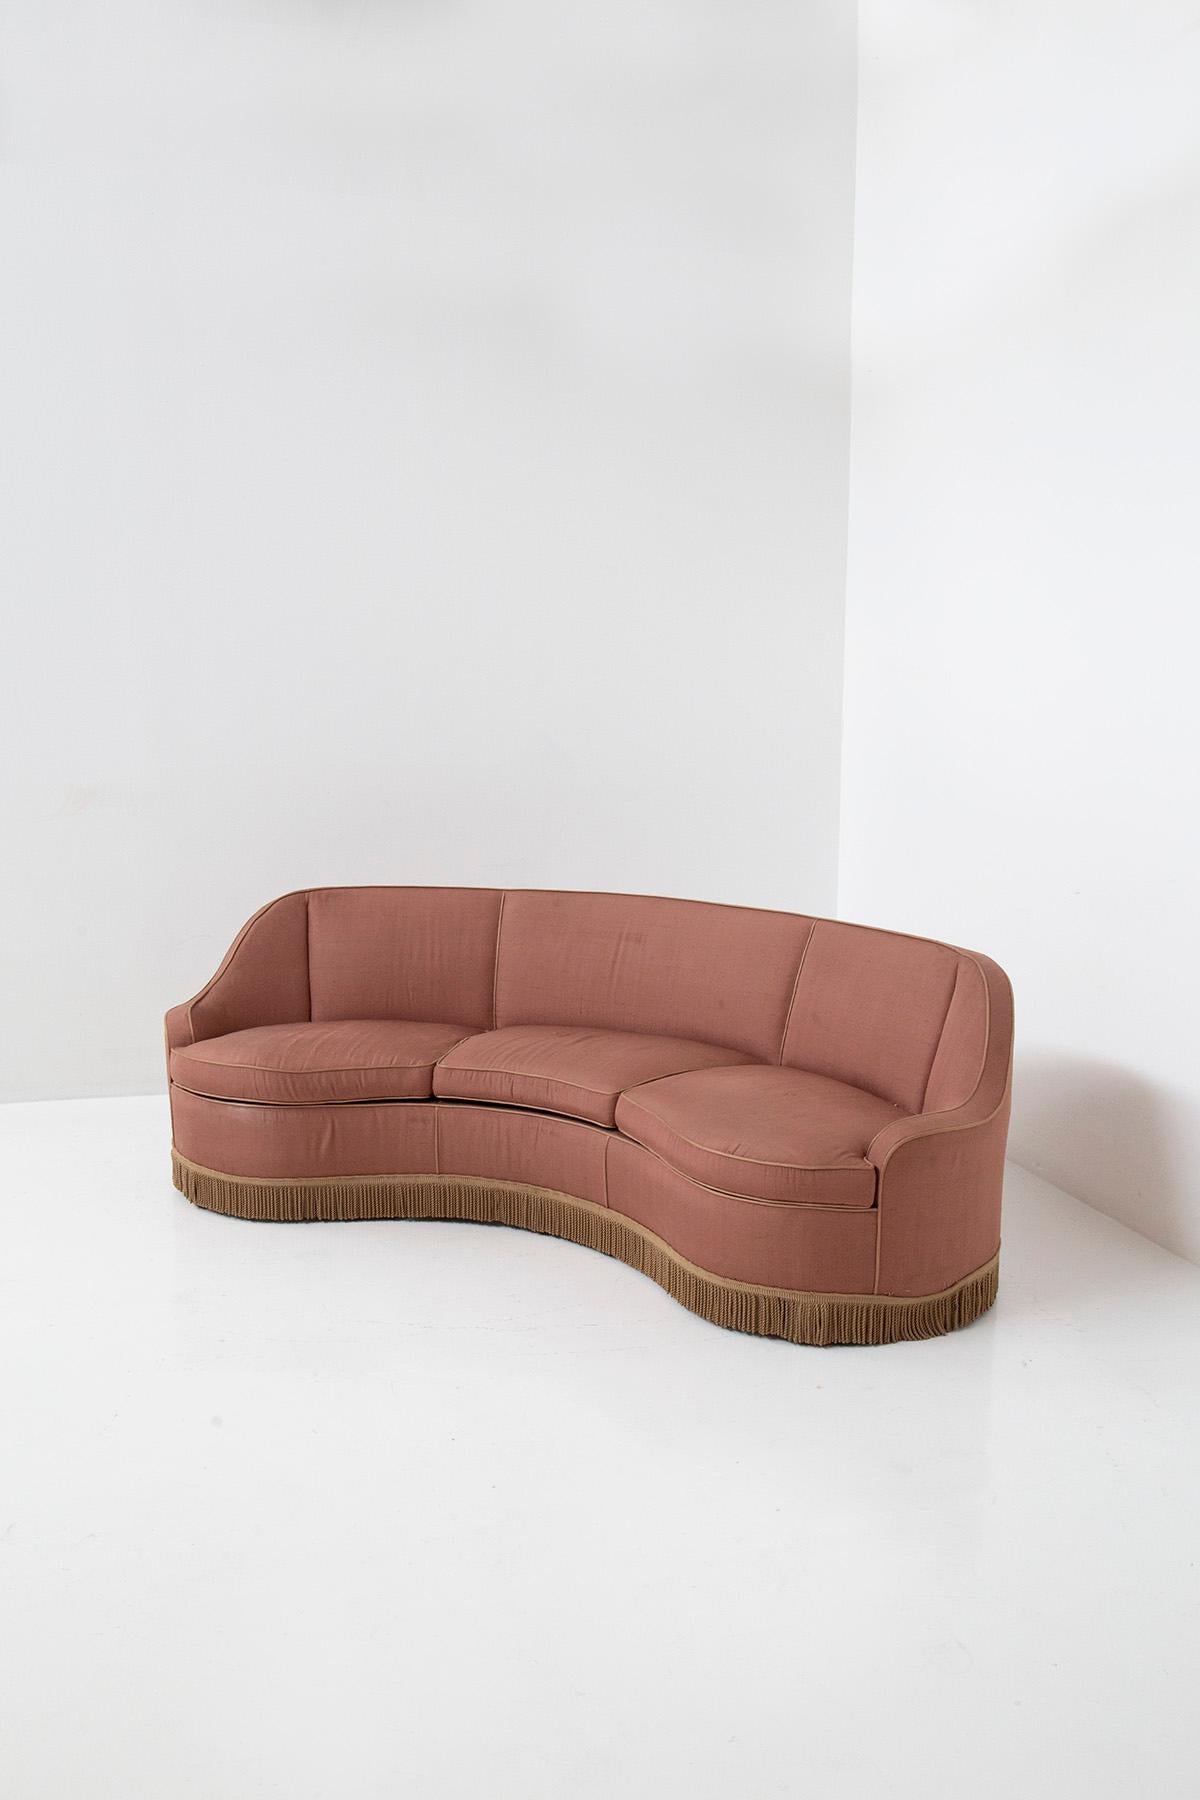 Mid-Century Modern Italian three-seater sofa in pink fabric attributed to Gio Ponti